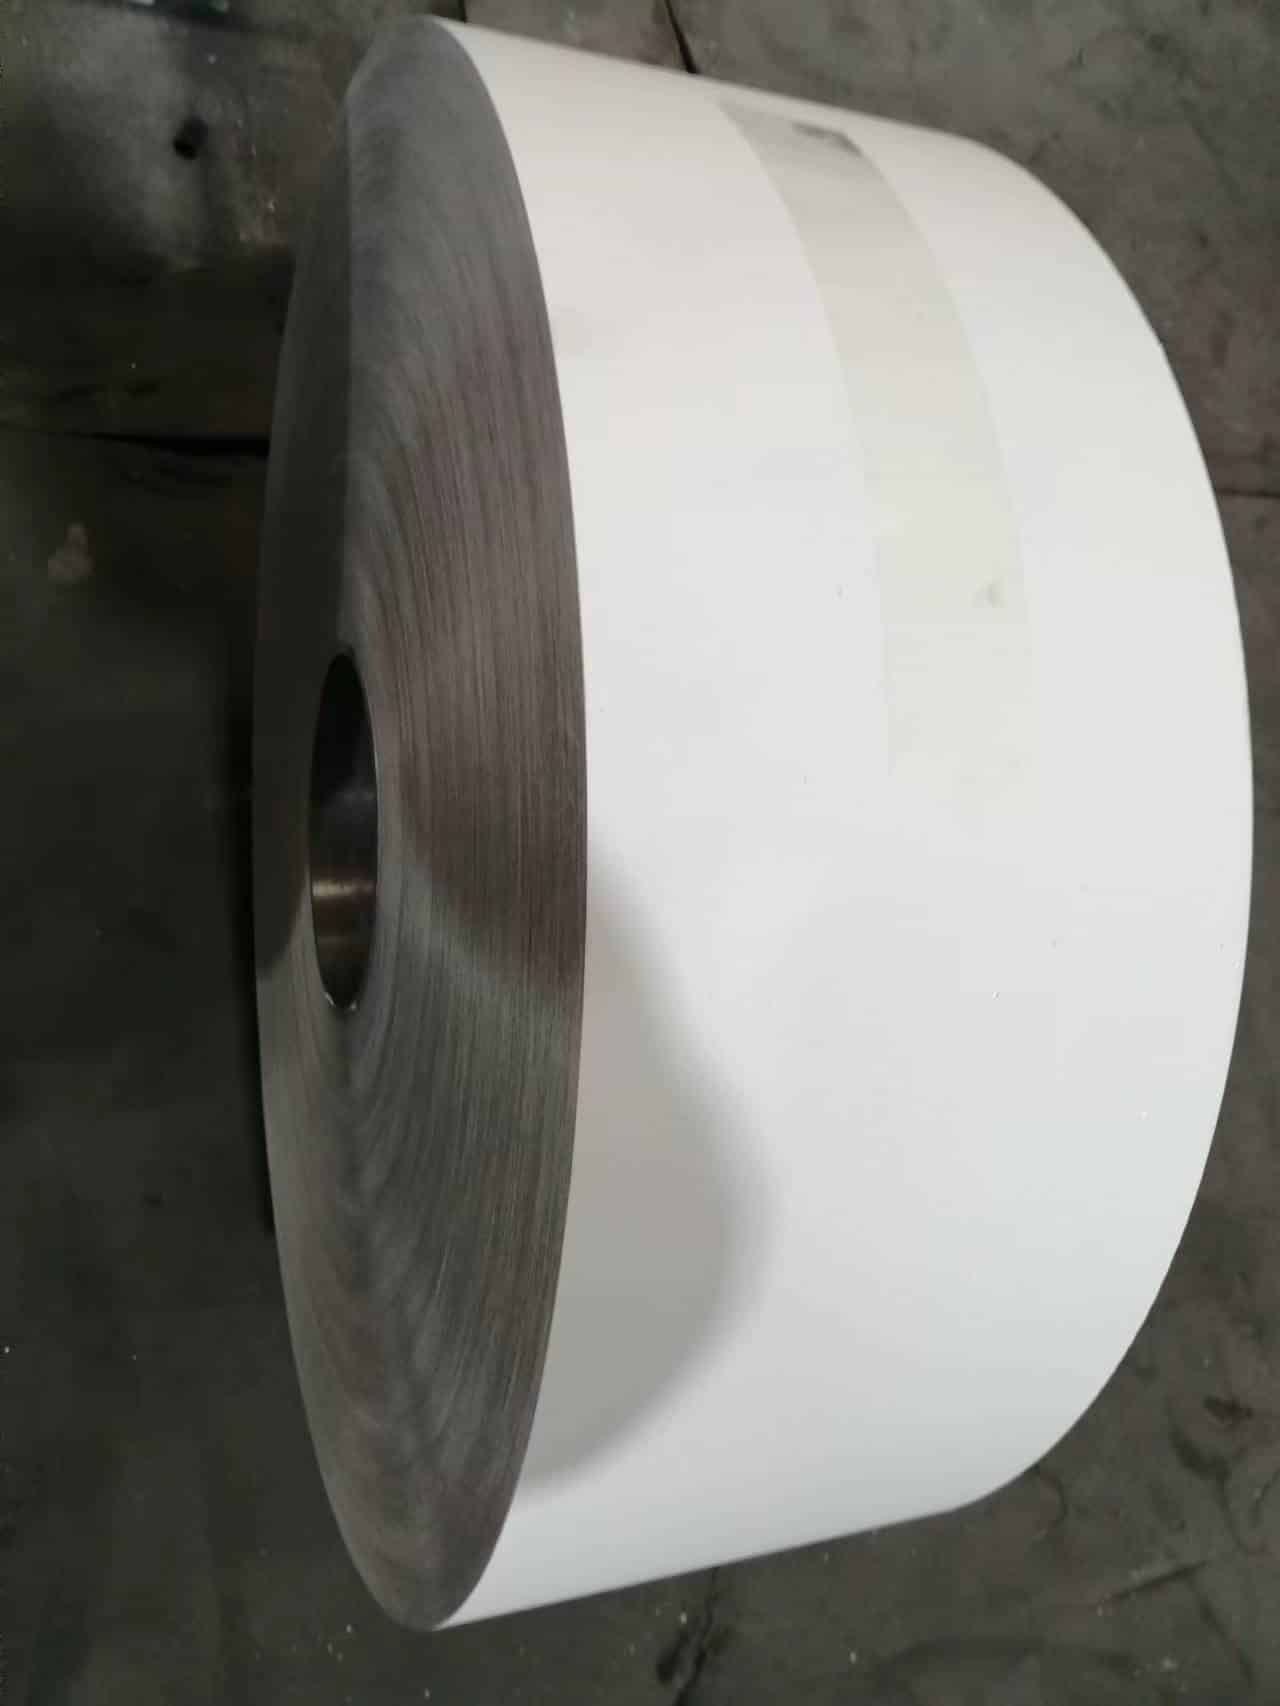 Top five aluminium foil manufacturers in the world